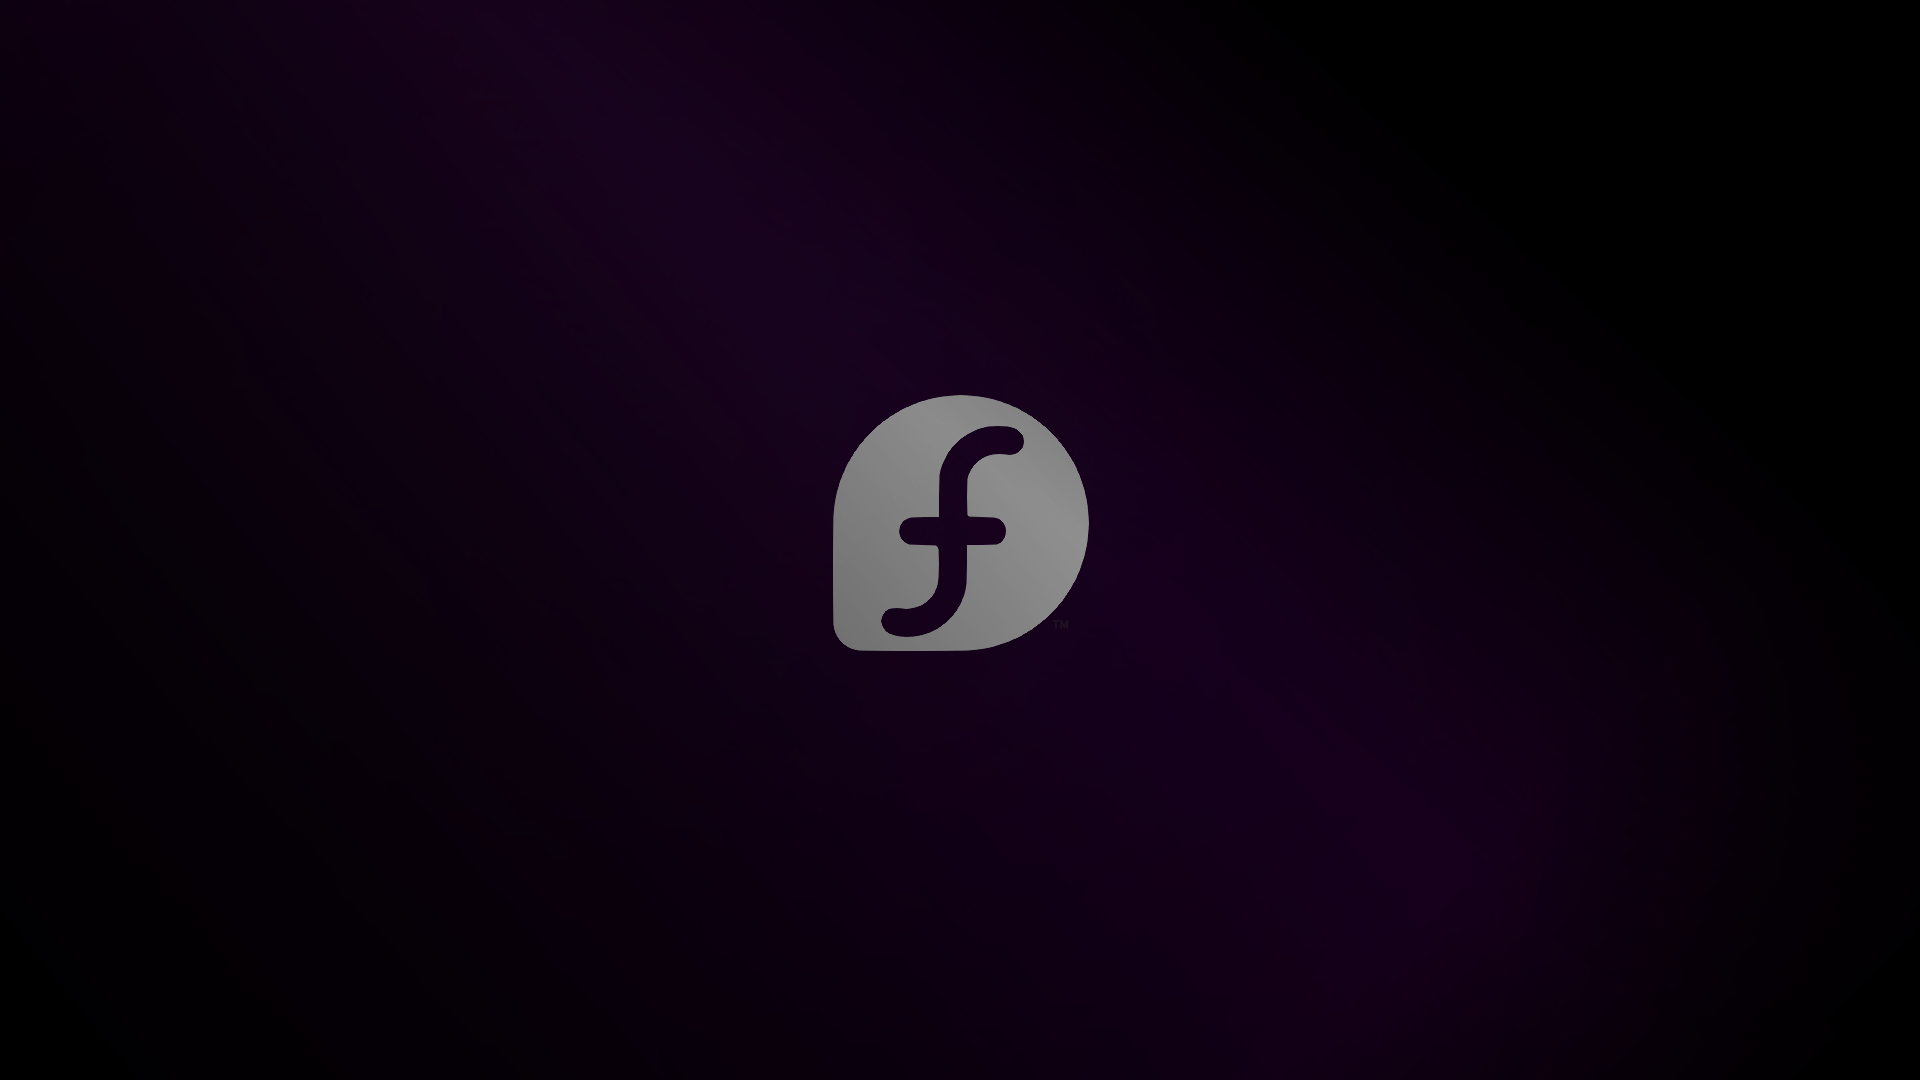 General 1920x1080 Fedora purple background digital art minimalism Linux operating system logo simple background